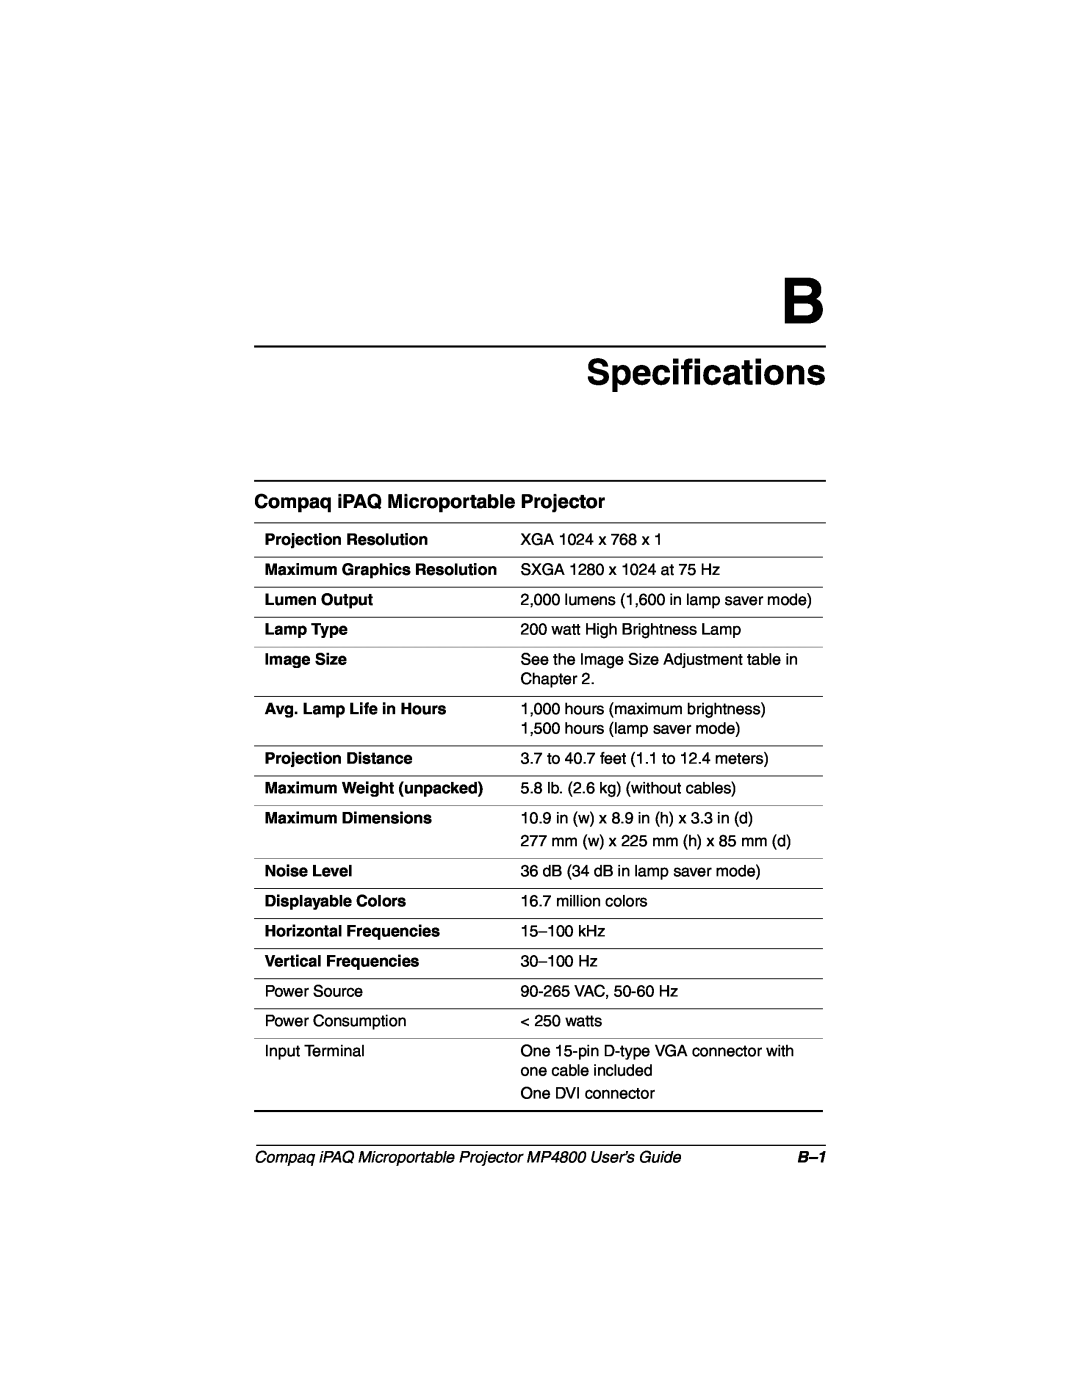 Compaq manual Specifications, Compaq iPAQ Microportable Projector MP4800 User’s Guide 